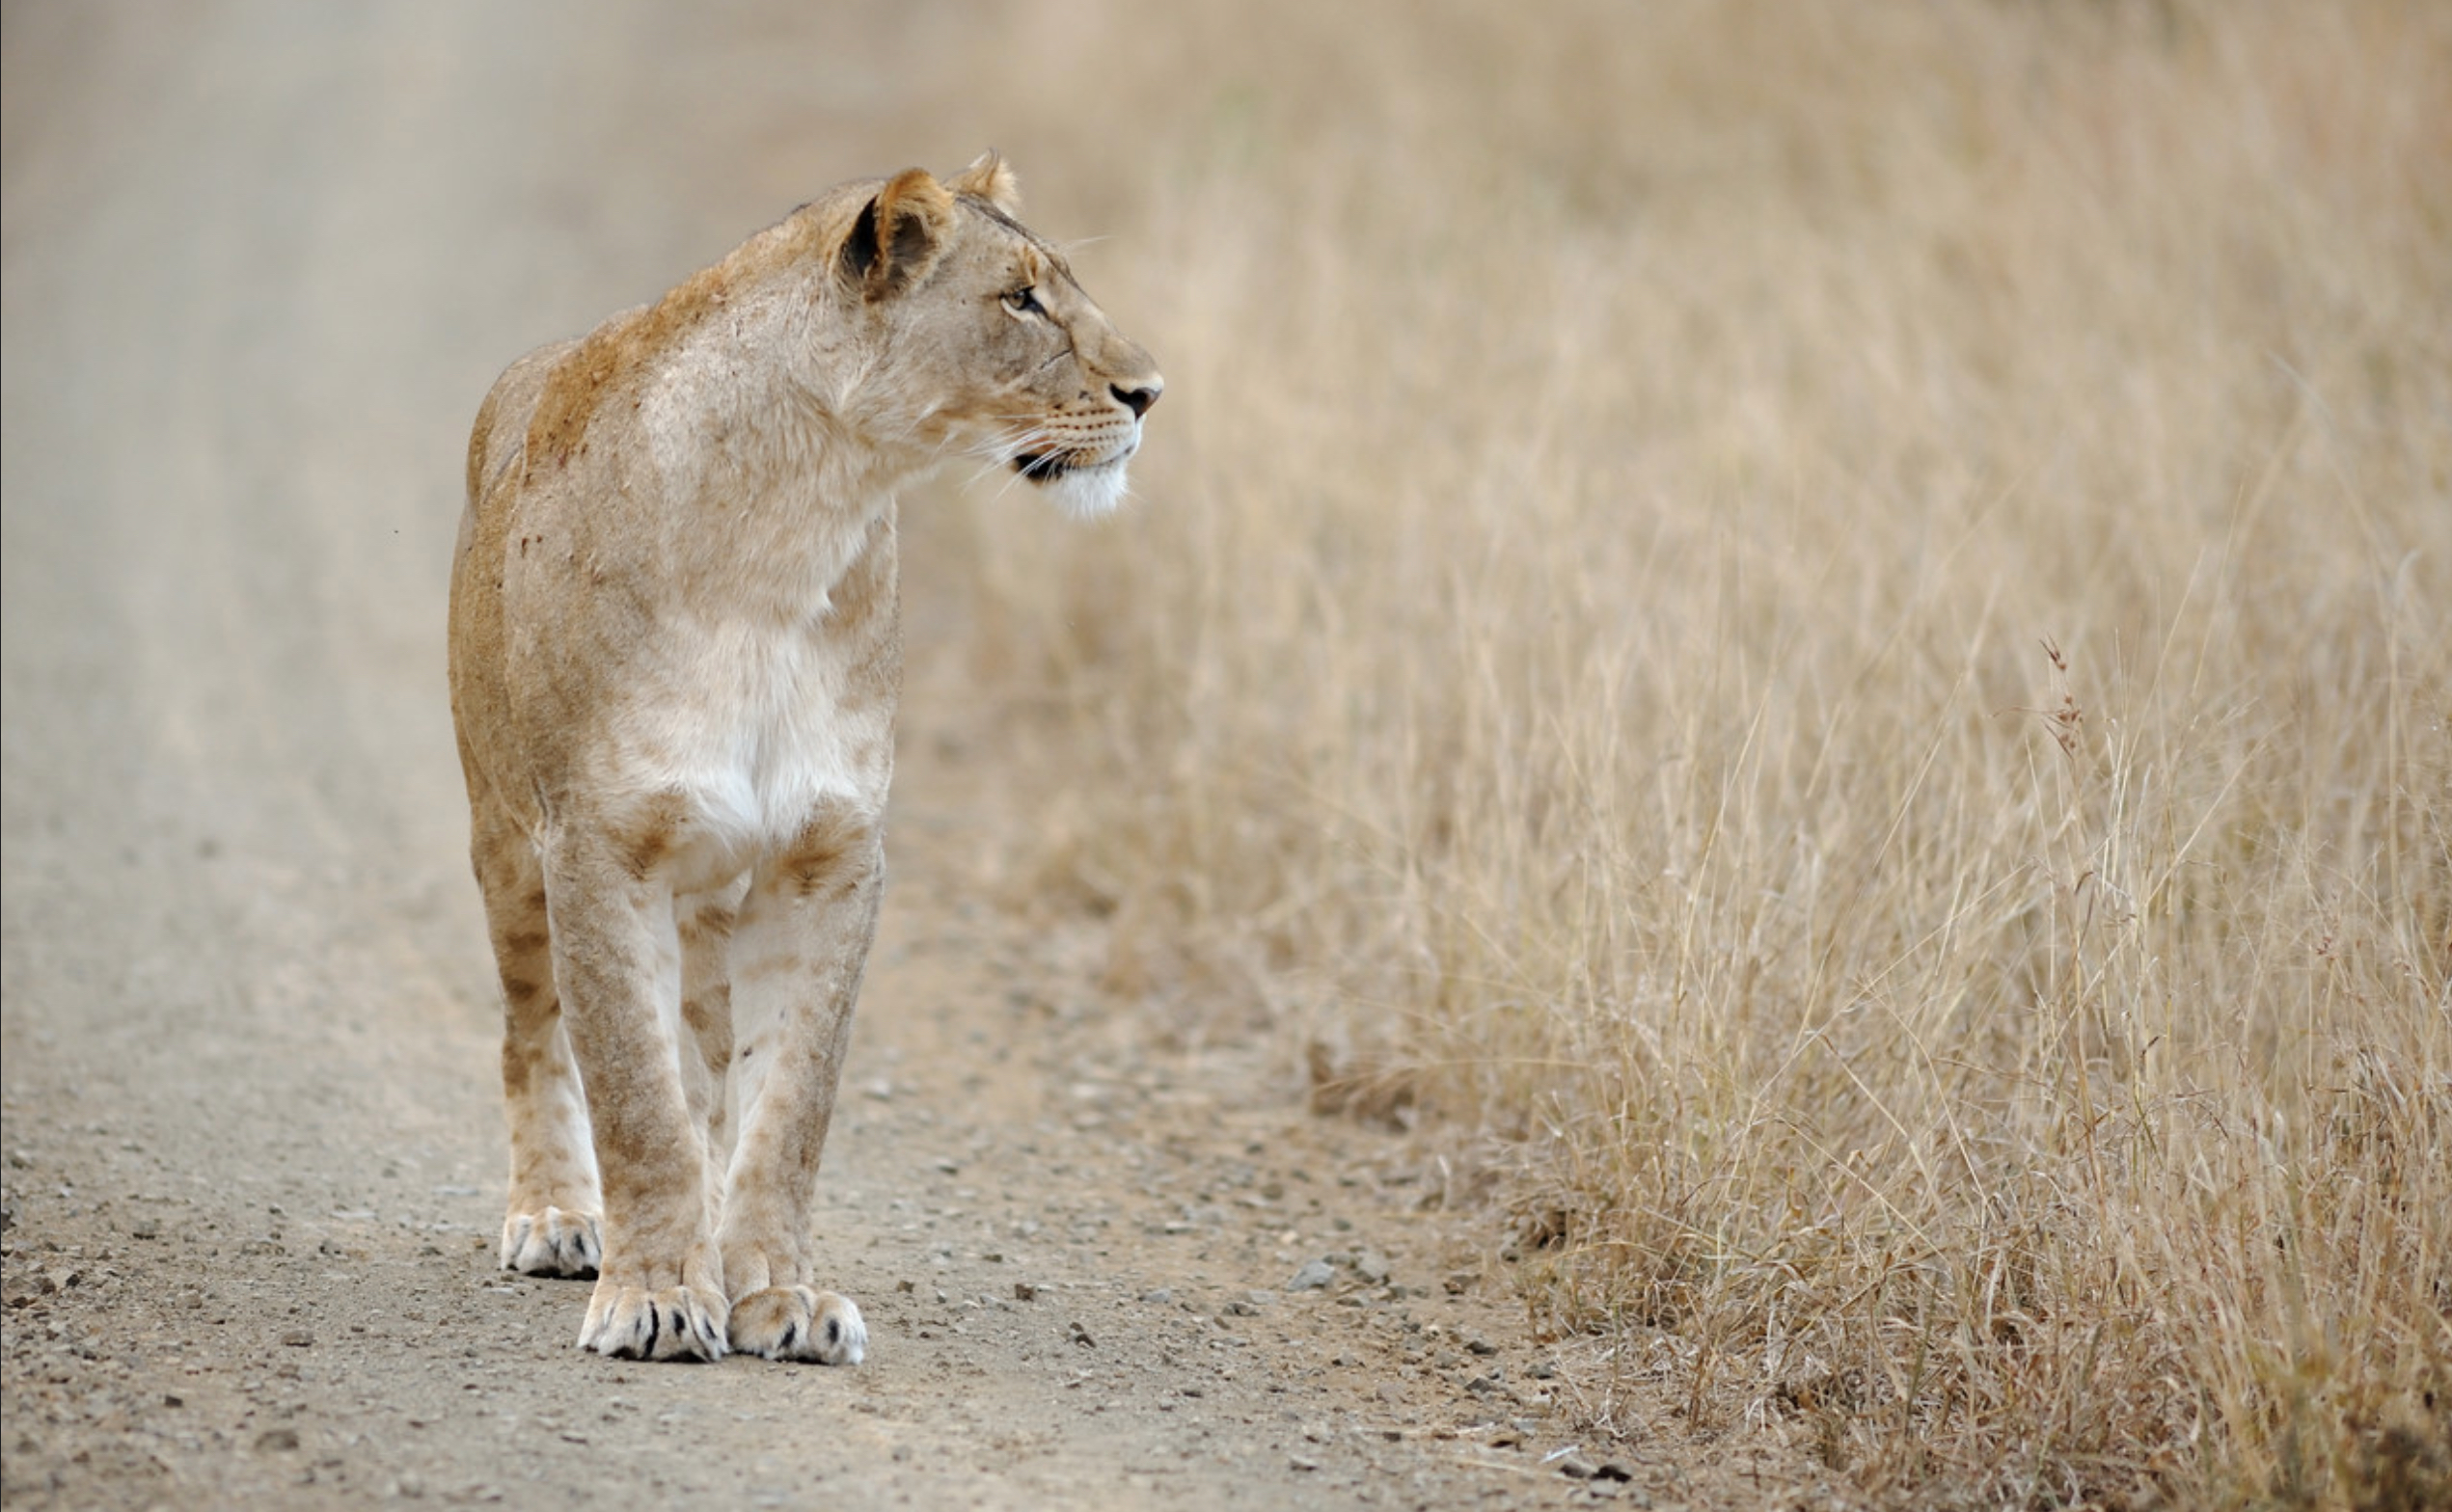 A lion walking down a dirt road